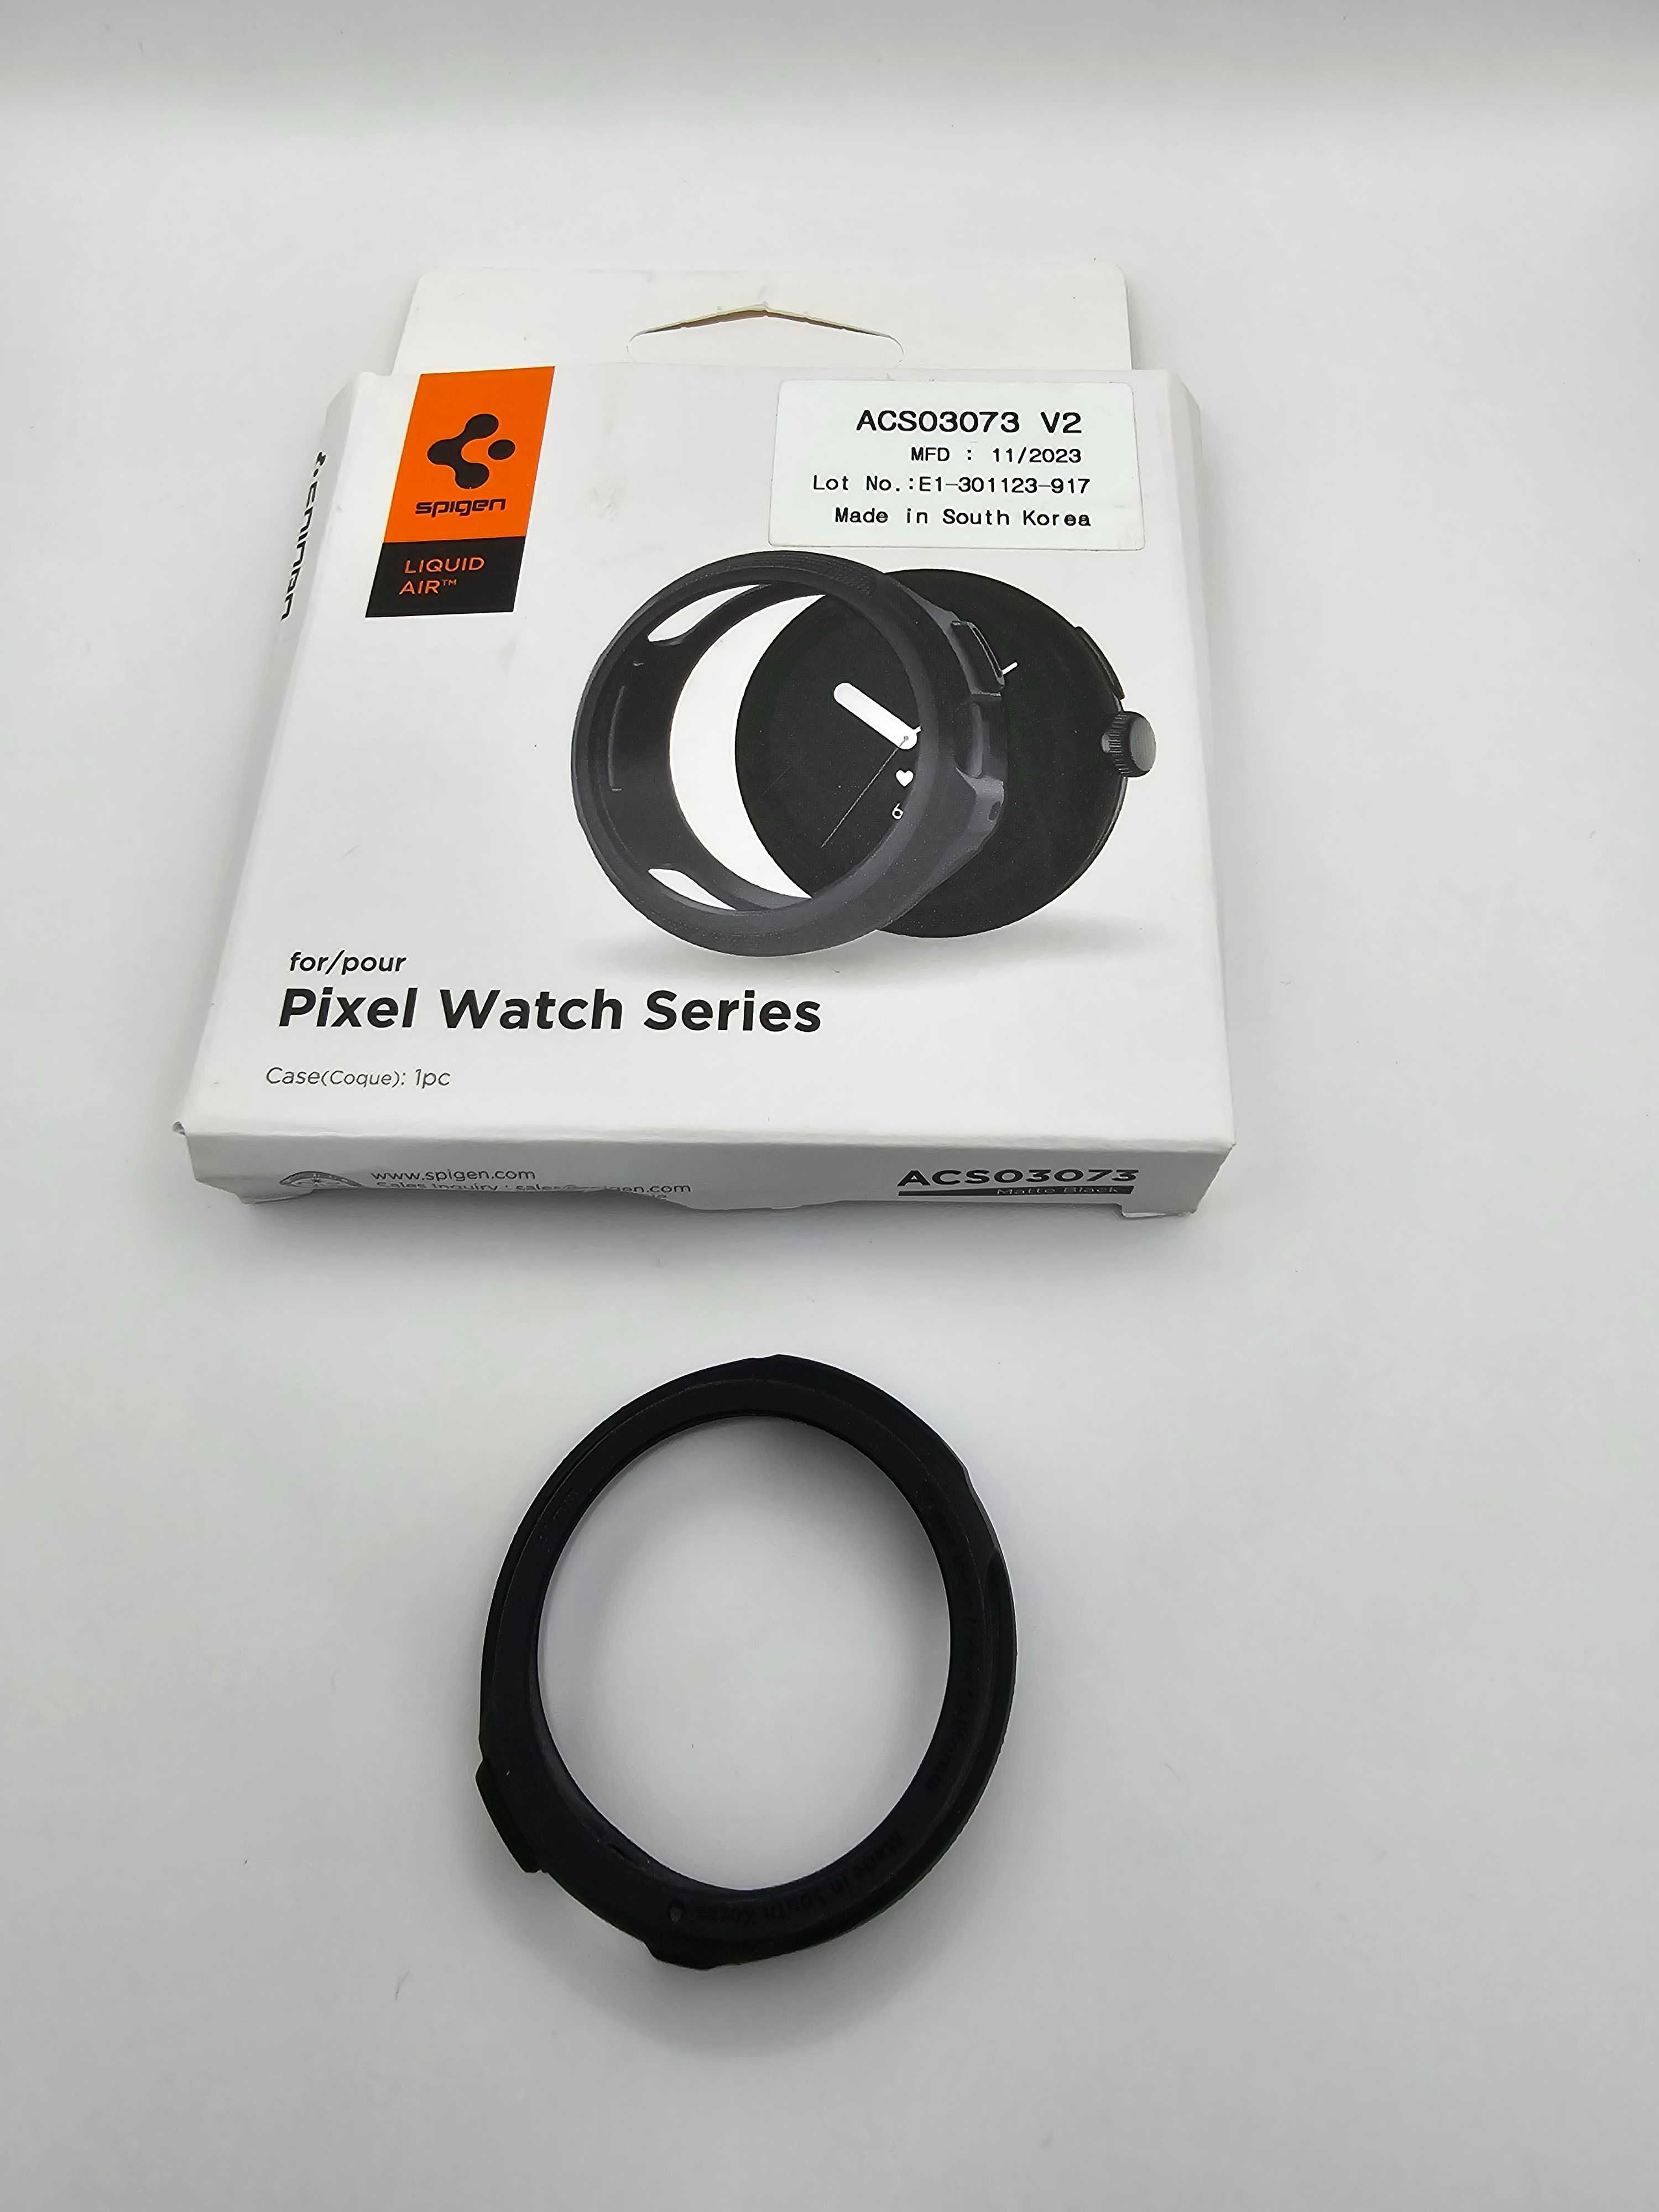 Case etui dla Google Pixel Watch 2 / Pixel Watch Case - matowa czerń